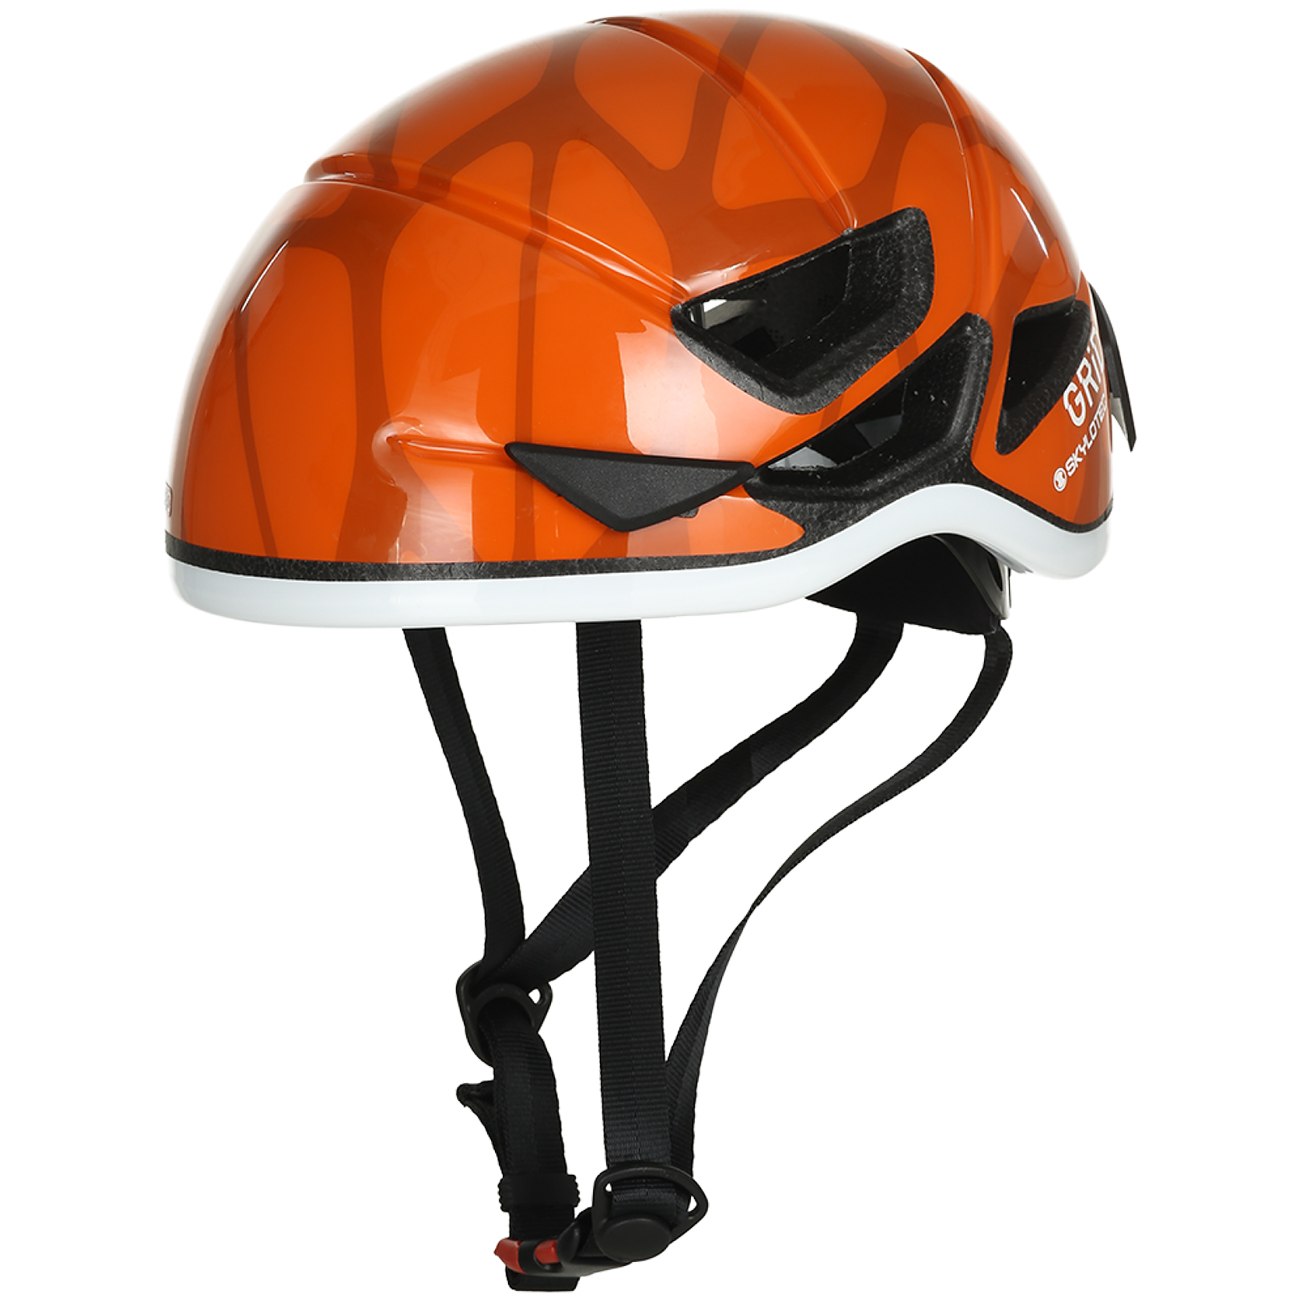 Produktbild von Skylotec grid Vent 55 Kletterhelm - orange